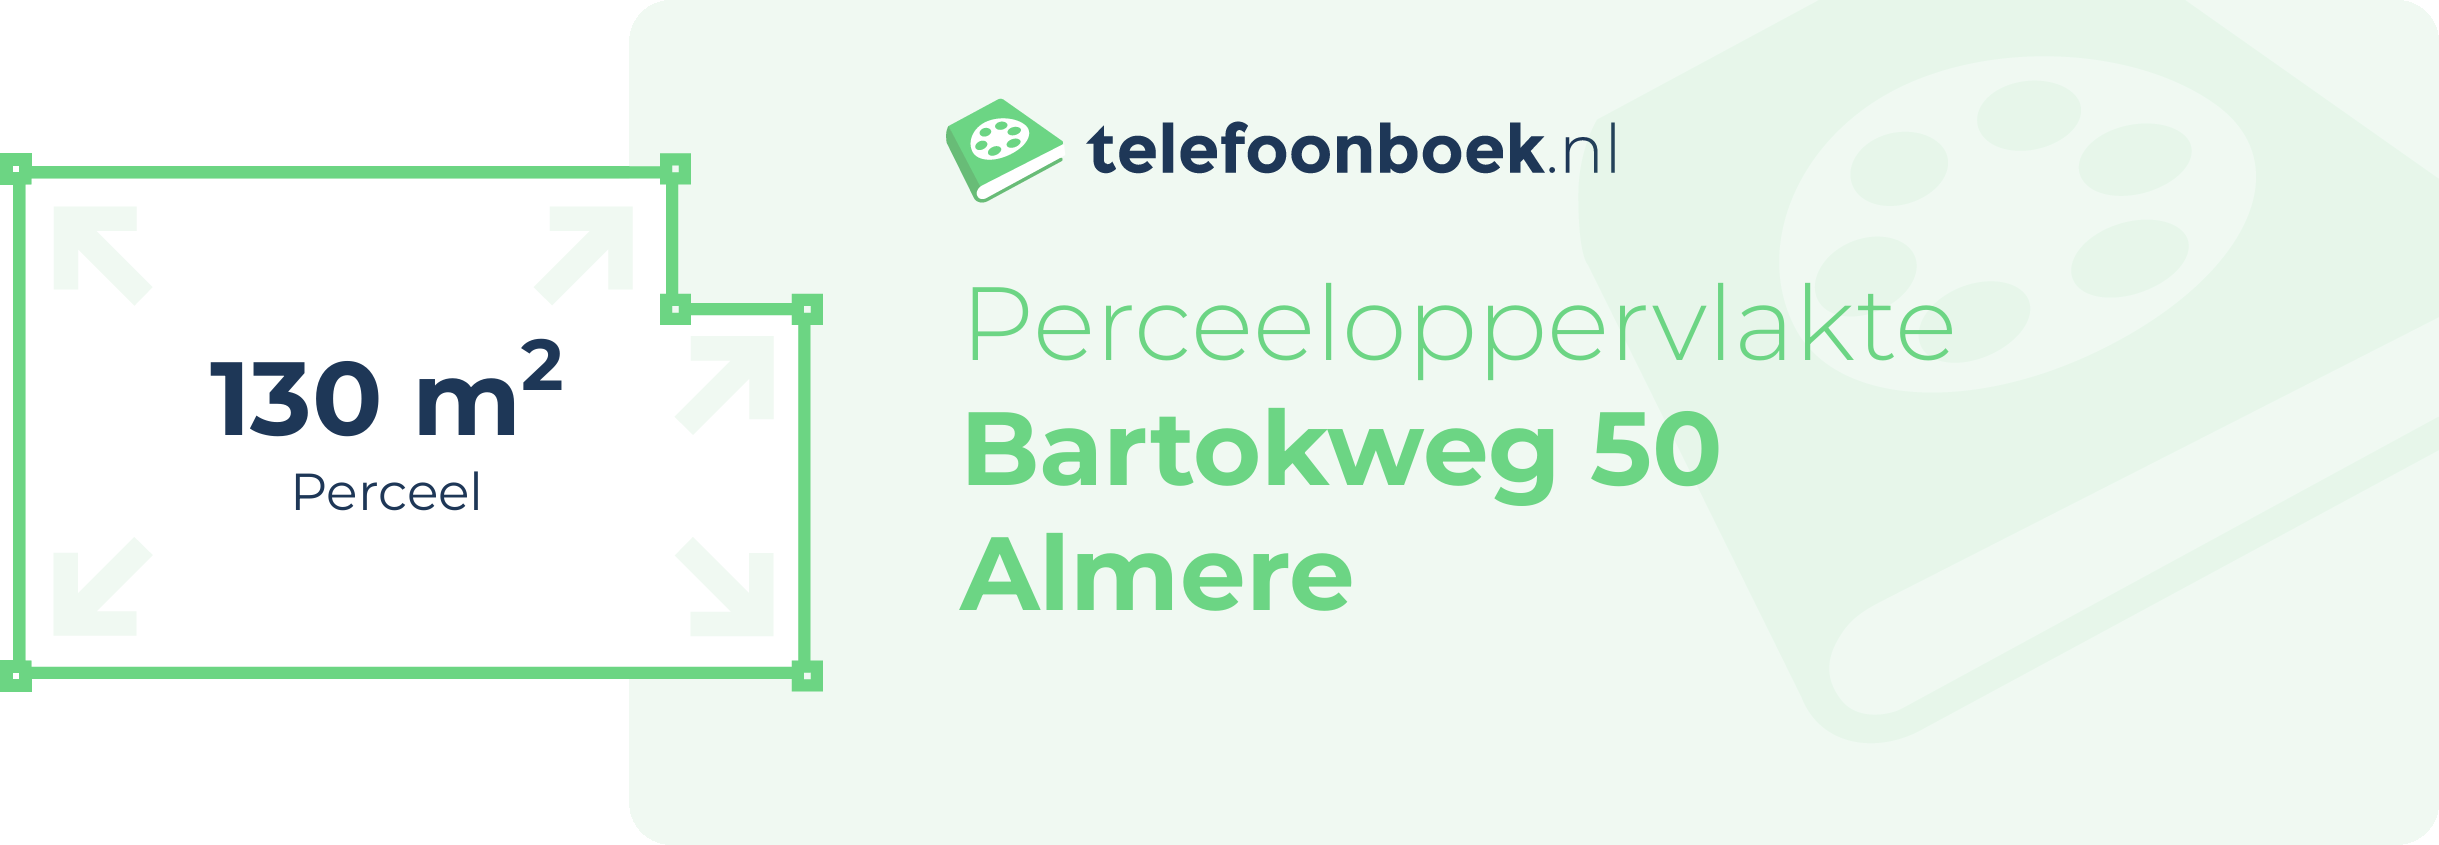 Perceeloppervlakte Bartokweg 50 Almere